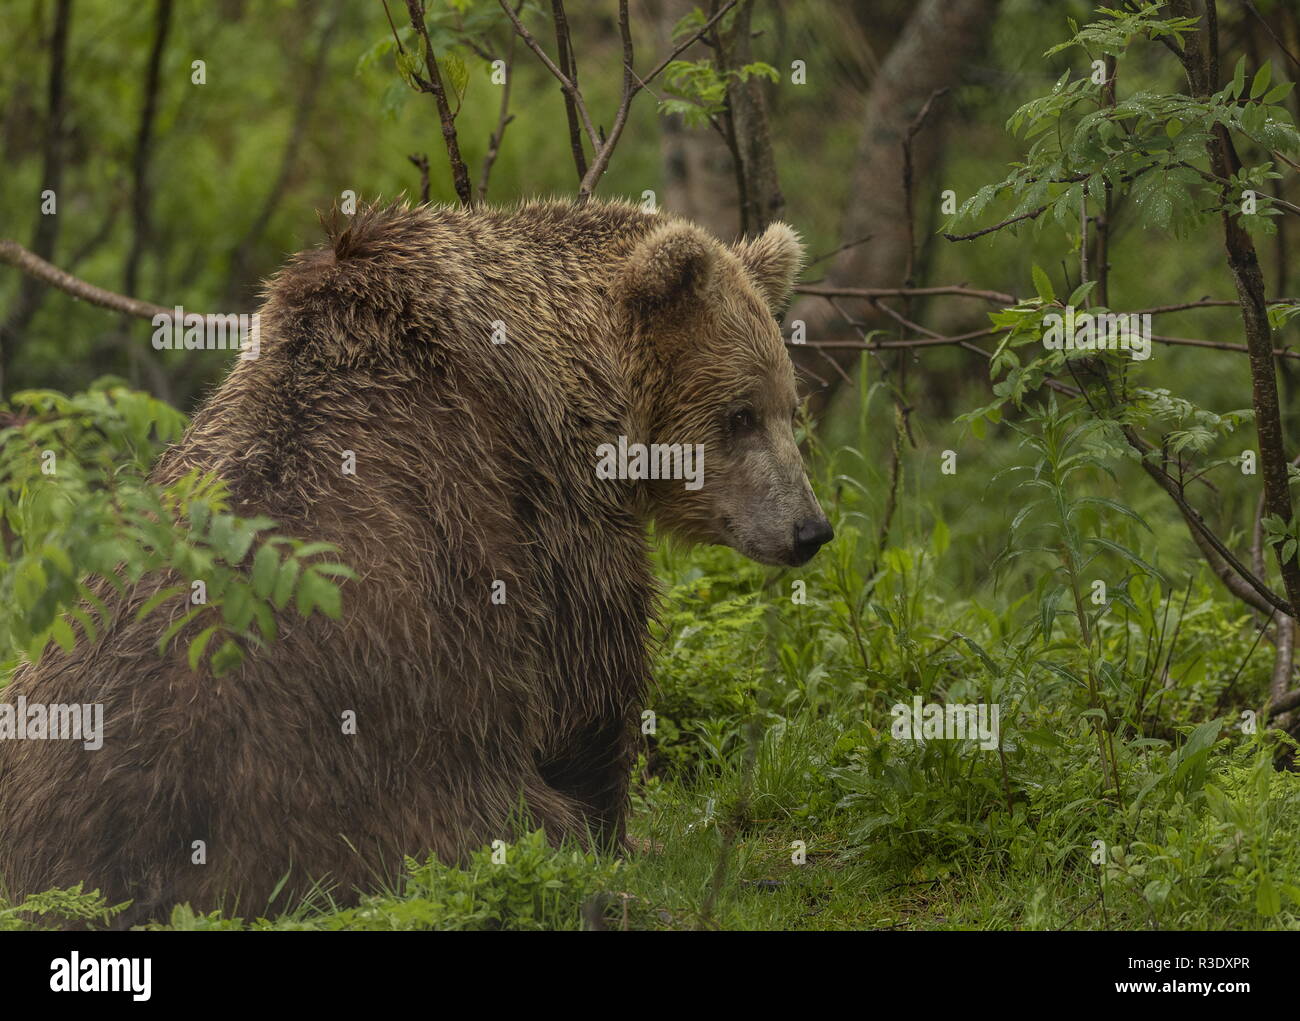 Unione di orso bruno Ursus arctos arctos, nel bosco boreral, Scandinavia settentrionale. Foto Stock